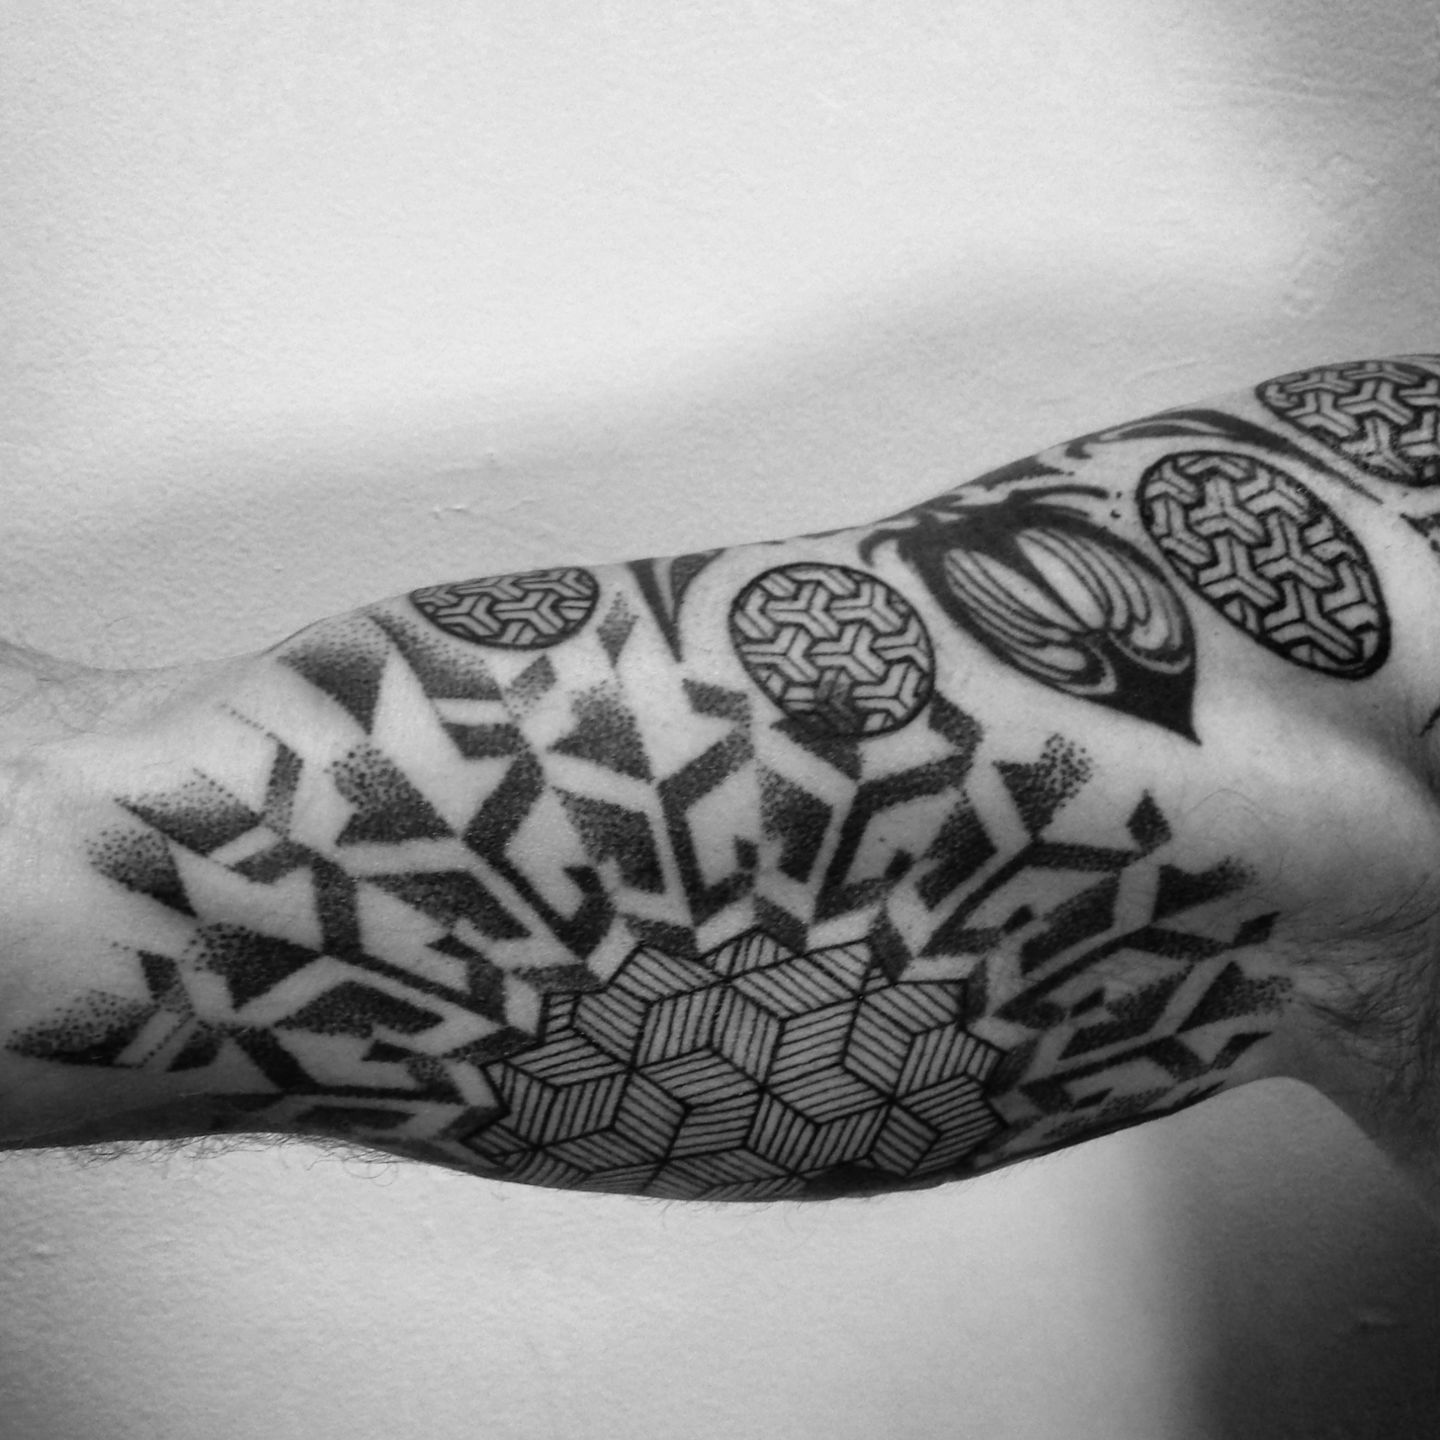 Exploding Planet Half Sleeve by Adam Sky, Morningstar Tattoo Parlor,  Belmont, Bay Area, California : r/tattoos